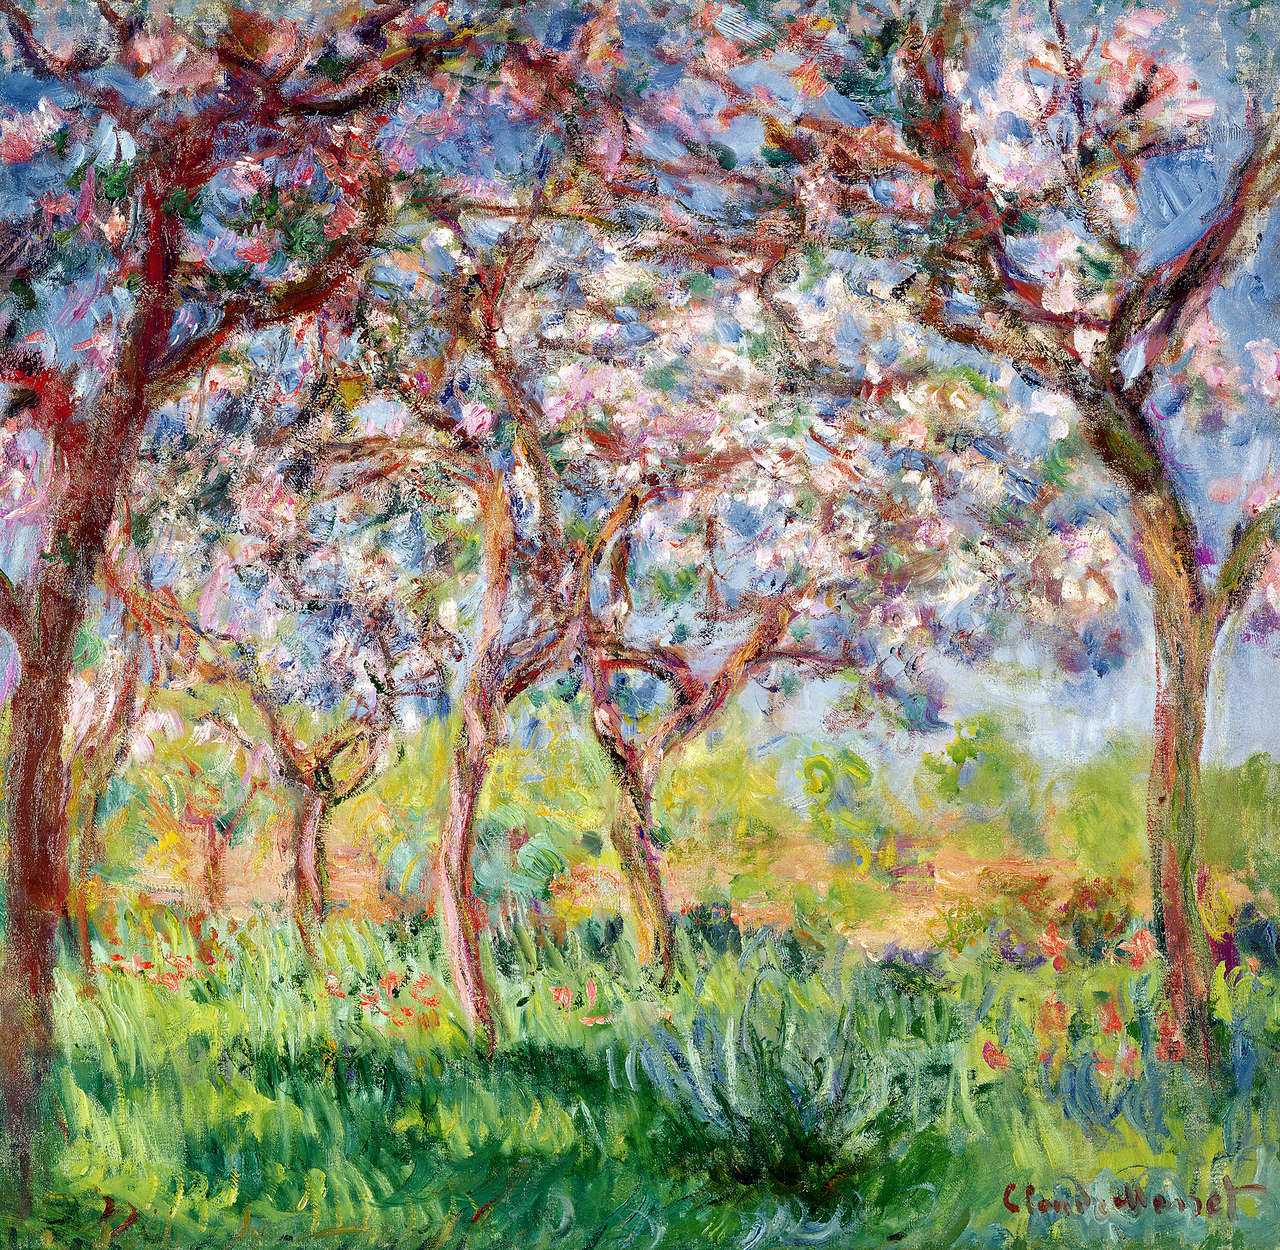             Fotomurali "Primavera a Giverny" di Claude Monet
        